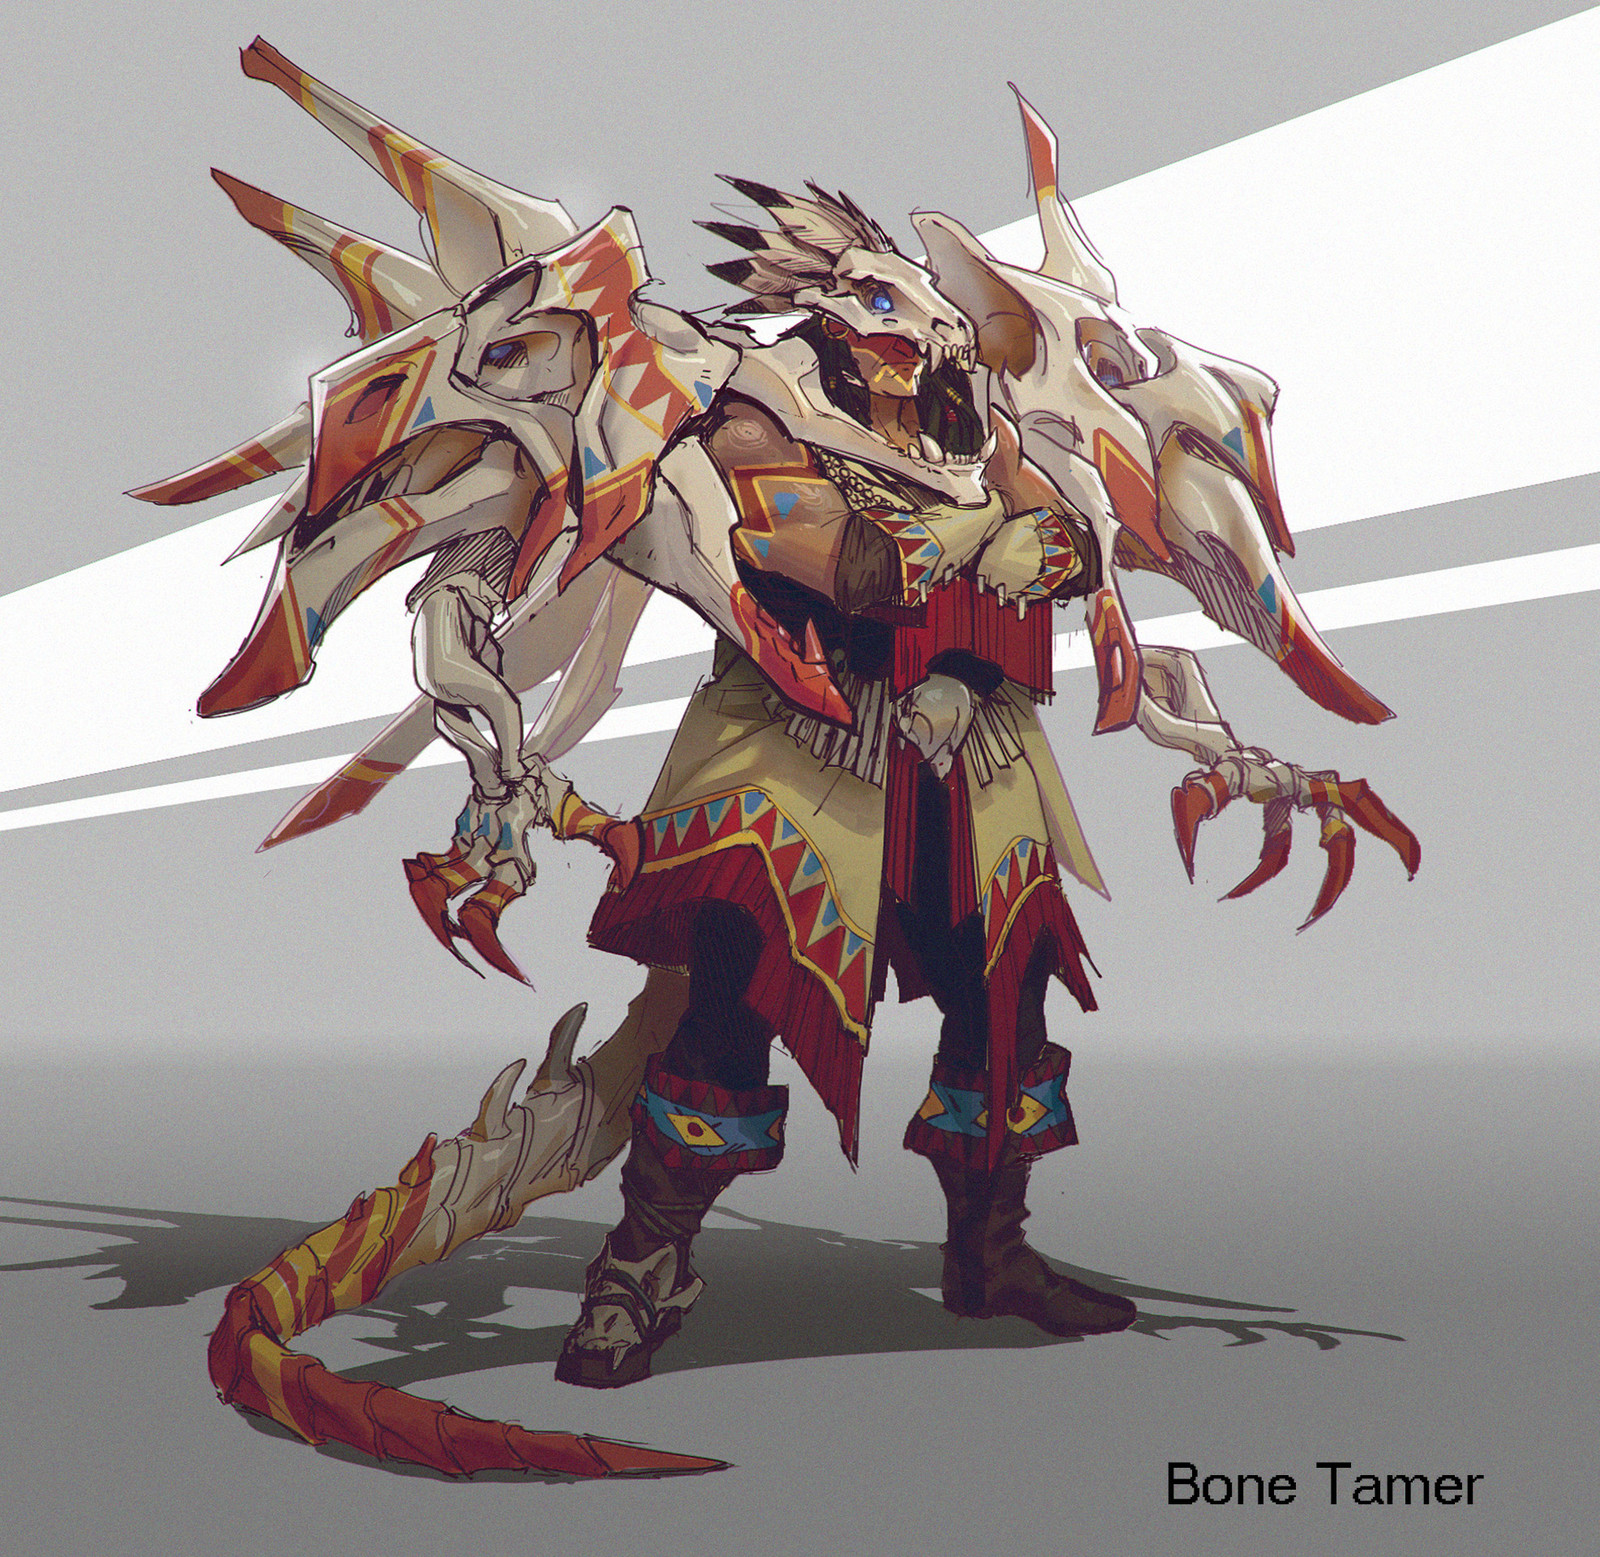 Bone Tamer